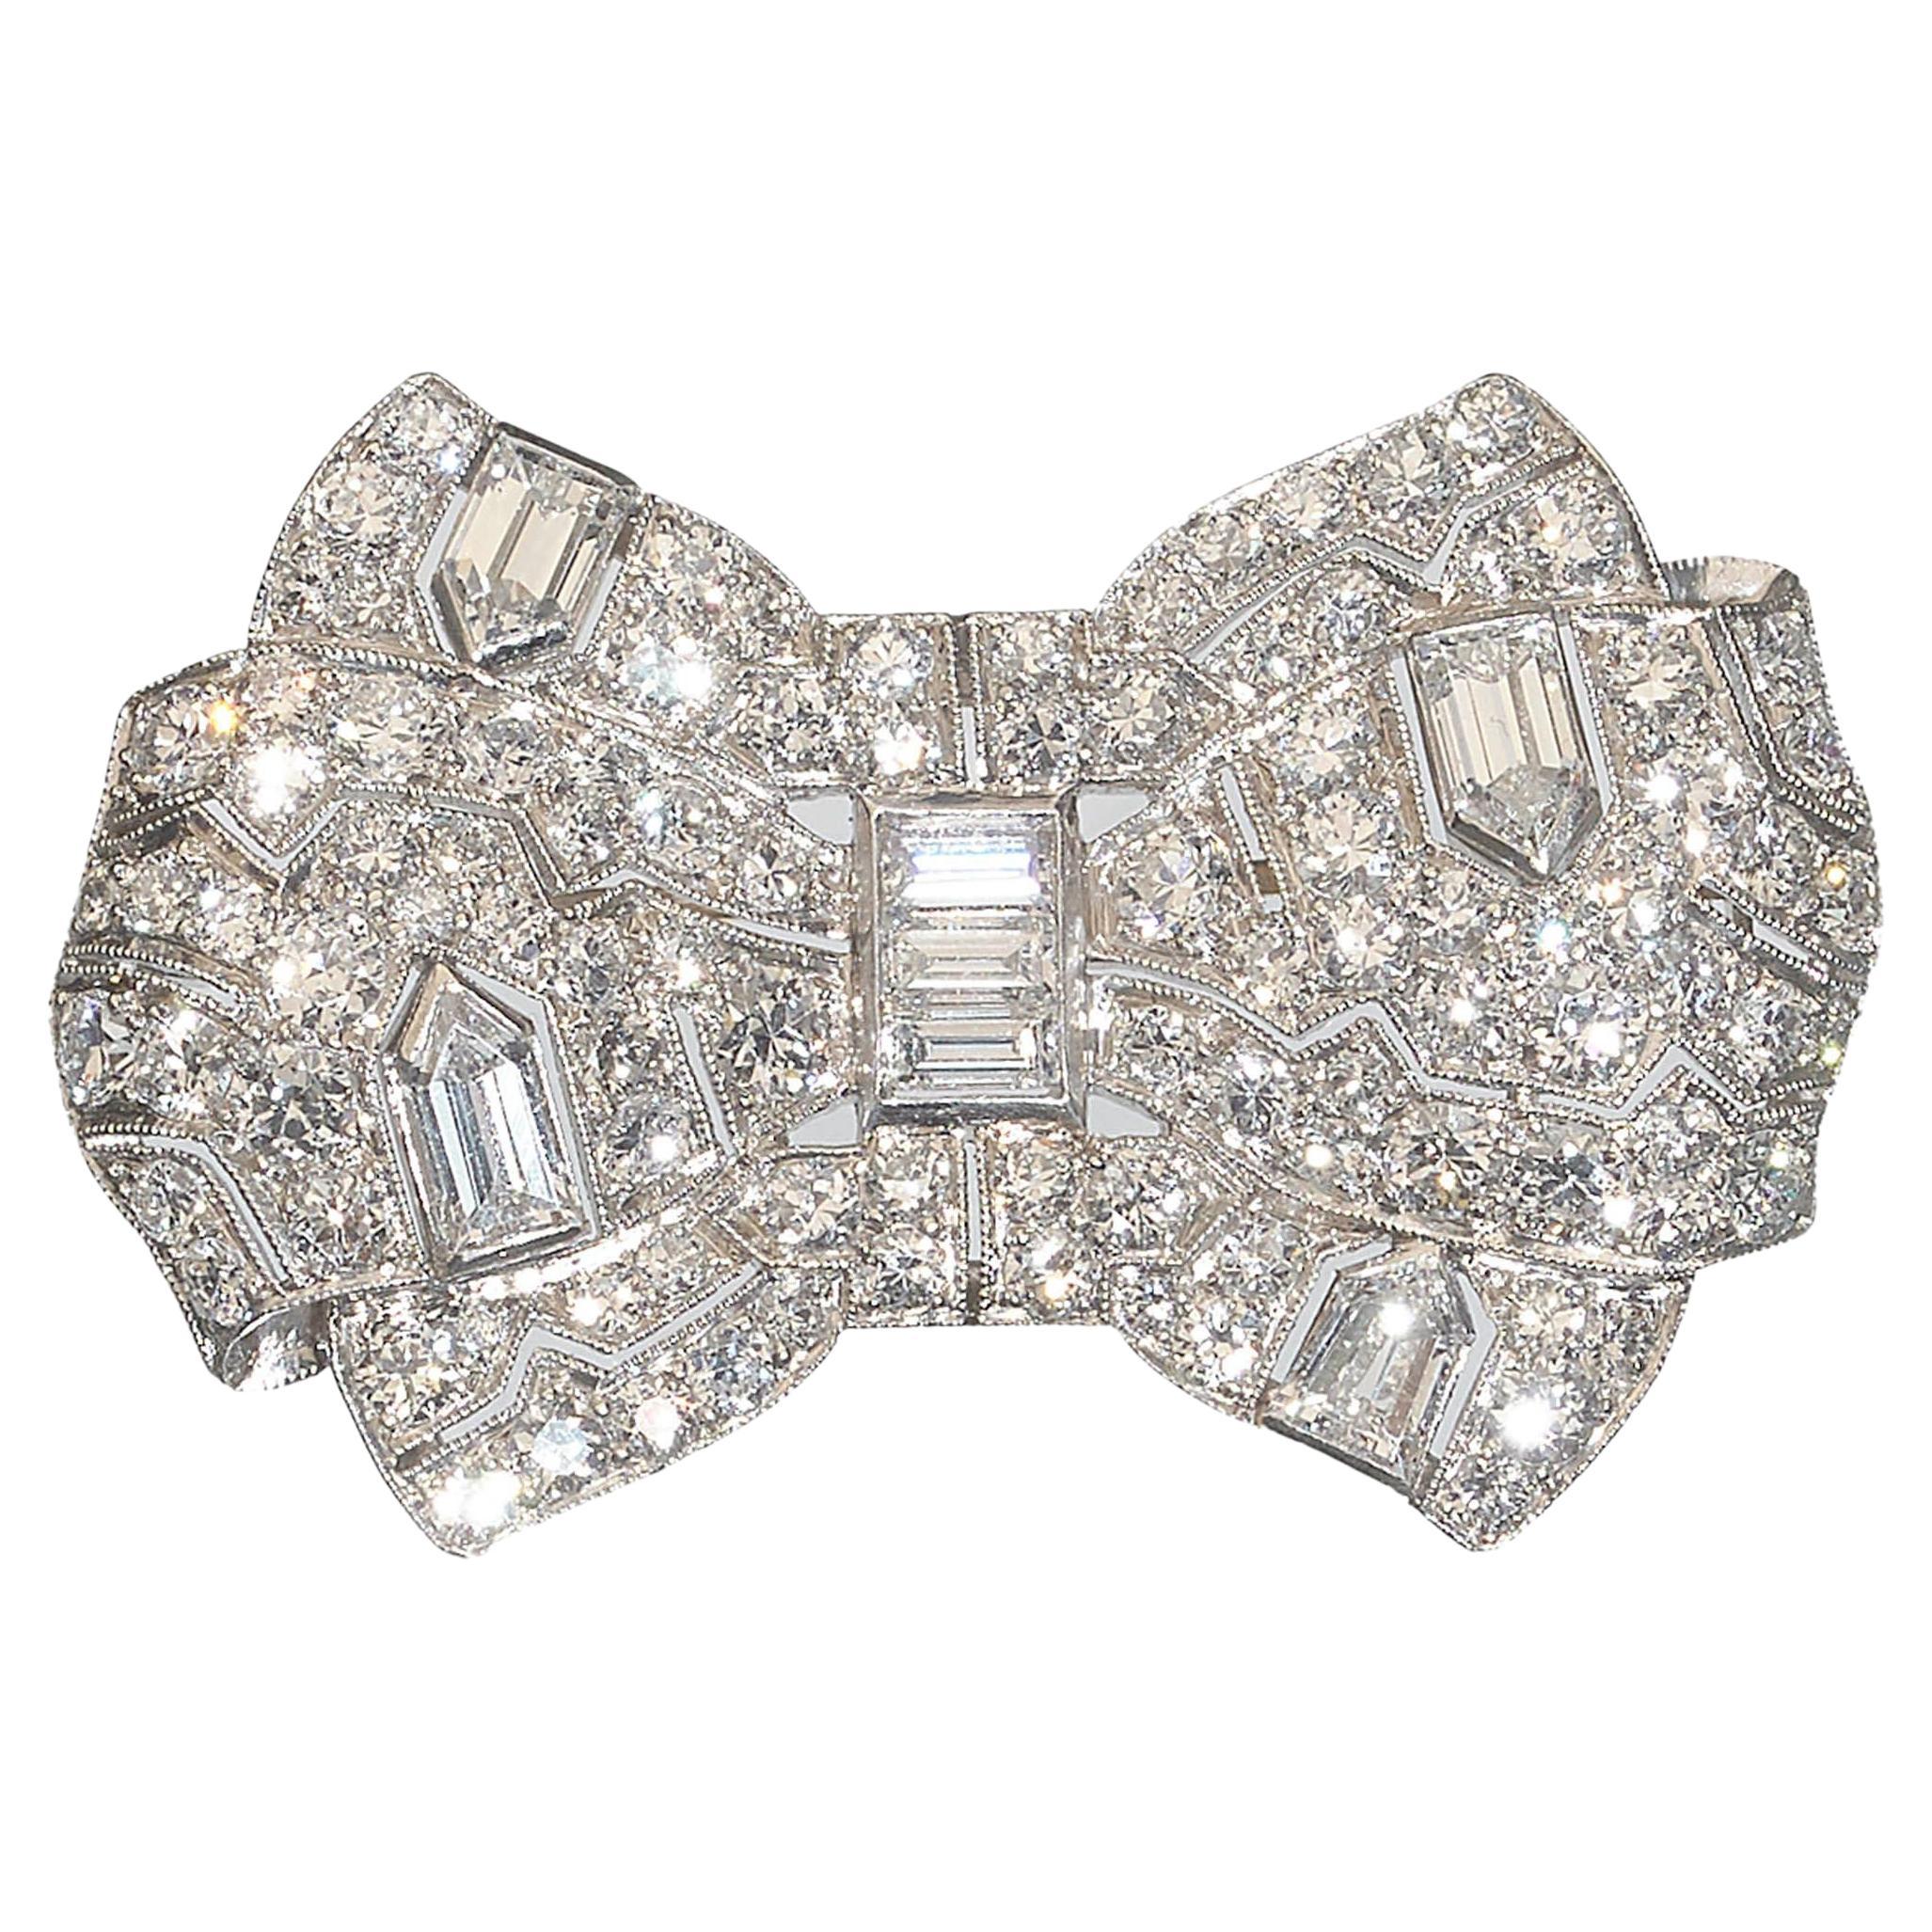 Tiffany Art Deco Diamond and Platinum Bow Brooch, circa 1930